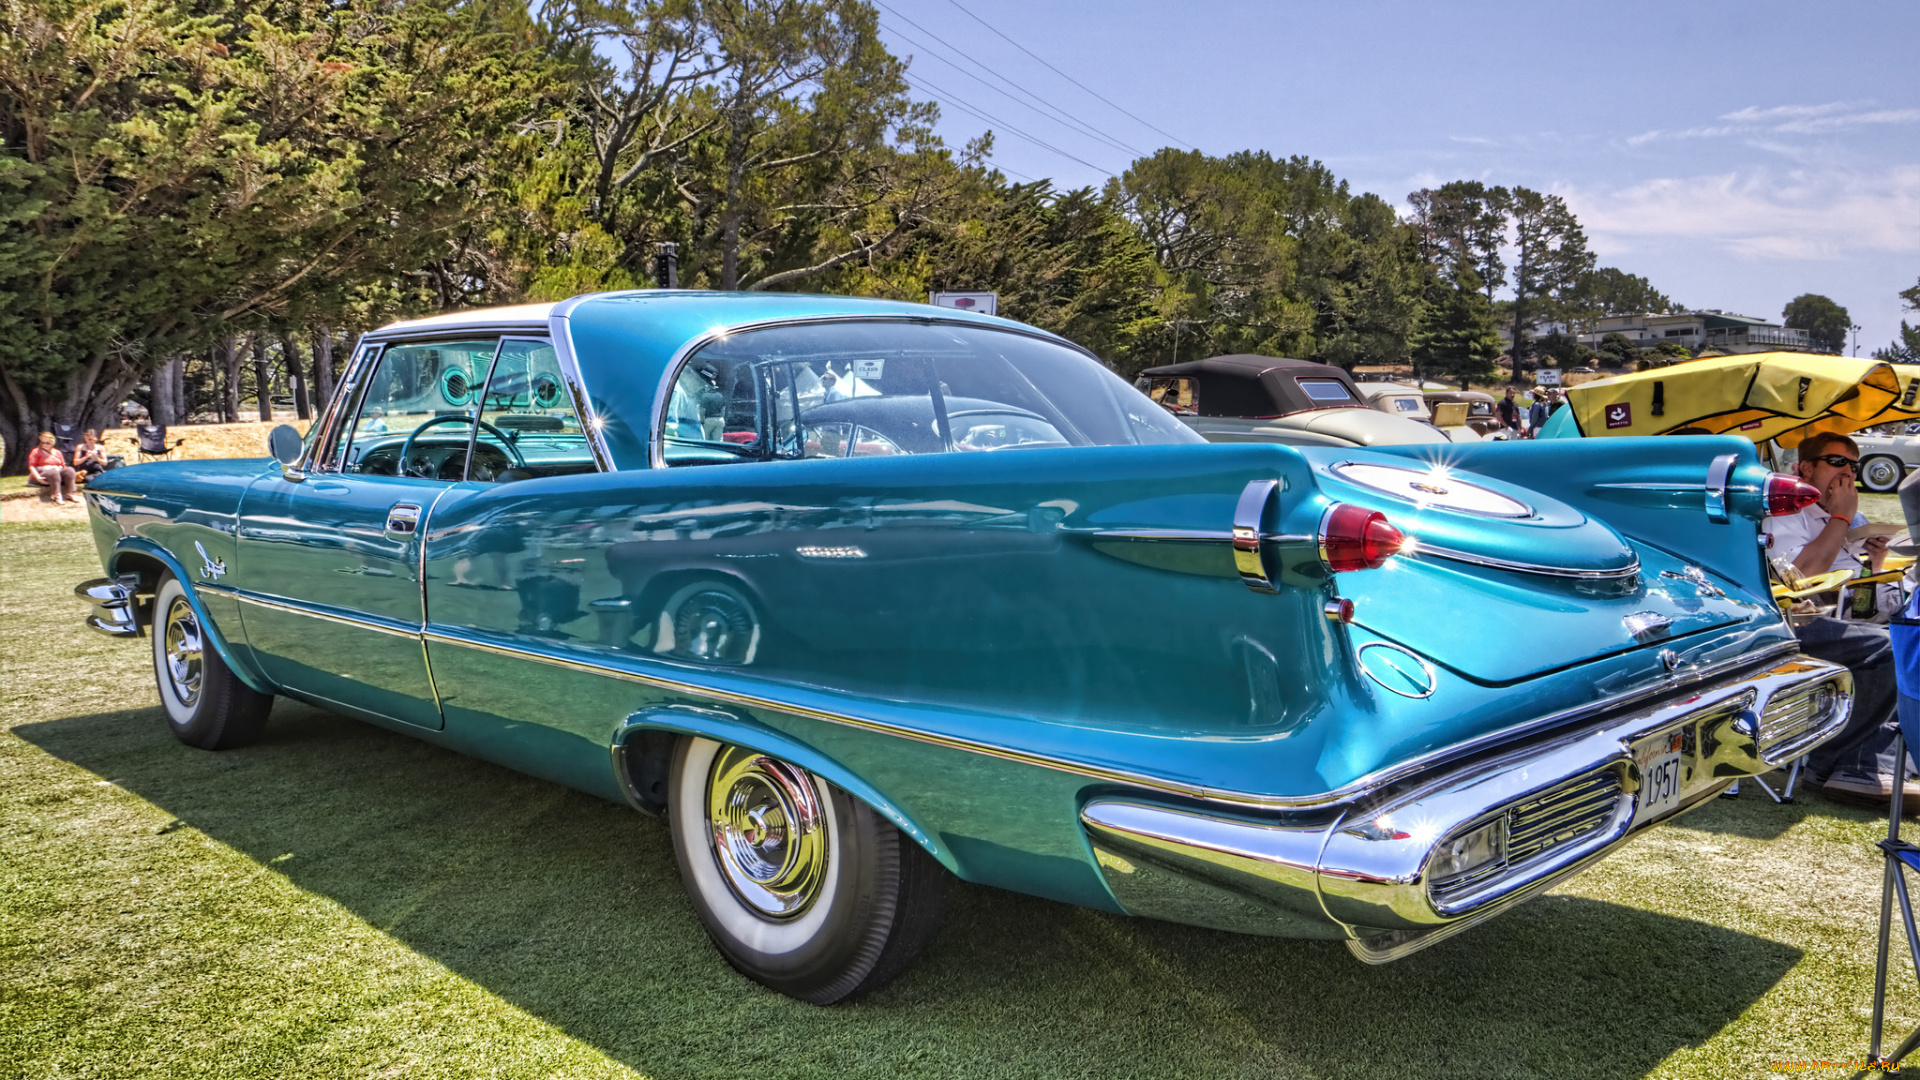 1957, imperial, crown, coupe, автомобили, выставки, и, уличные, фото, автошоу, выставка